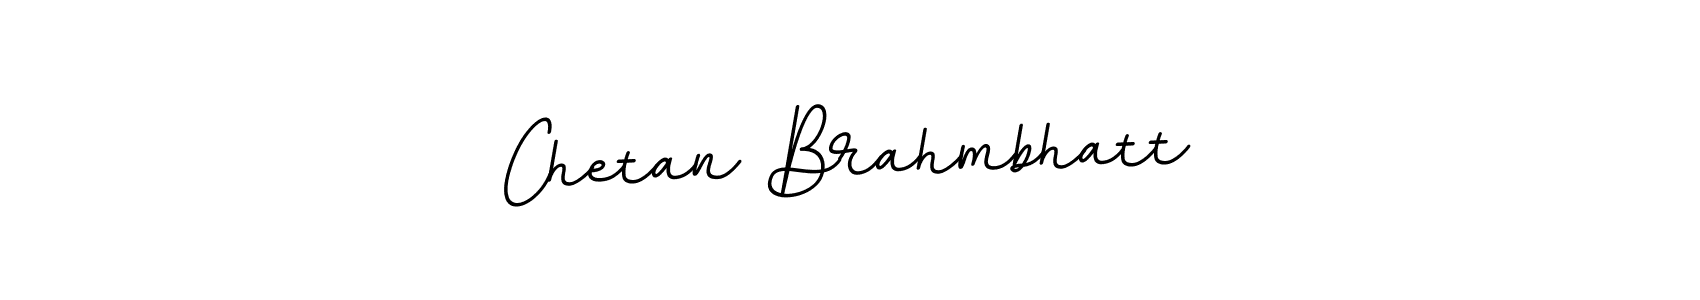 Chetan Brahmbhatt stylish signature style. Best Handwritten Sign (BallpointsItalic-DORy9) for my name. Handwritten Signature Collection Ideas for my name Chetan Brahmbhatt. Chetan Brahmbhatt signature style 11 images and pictures png